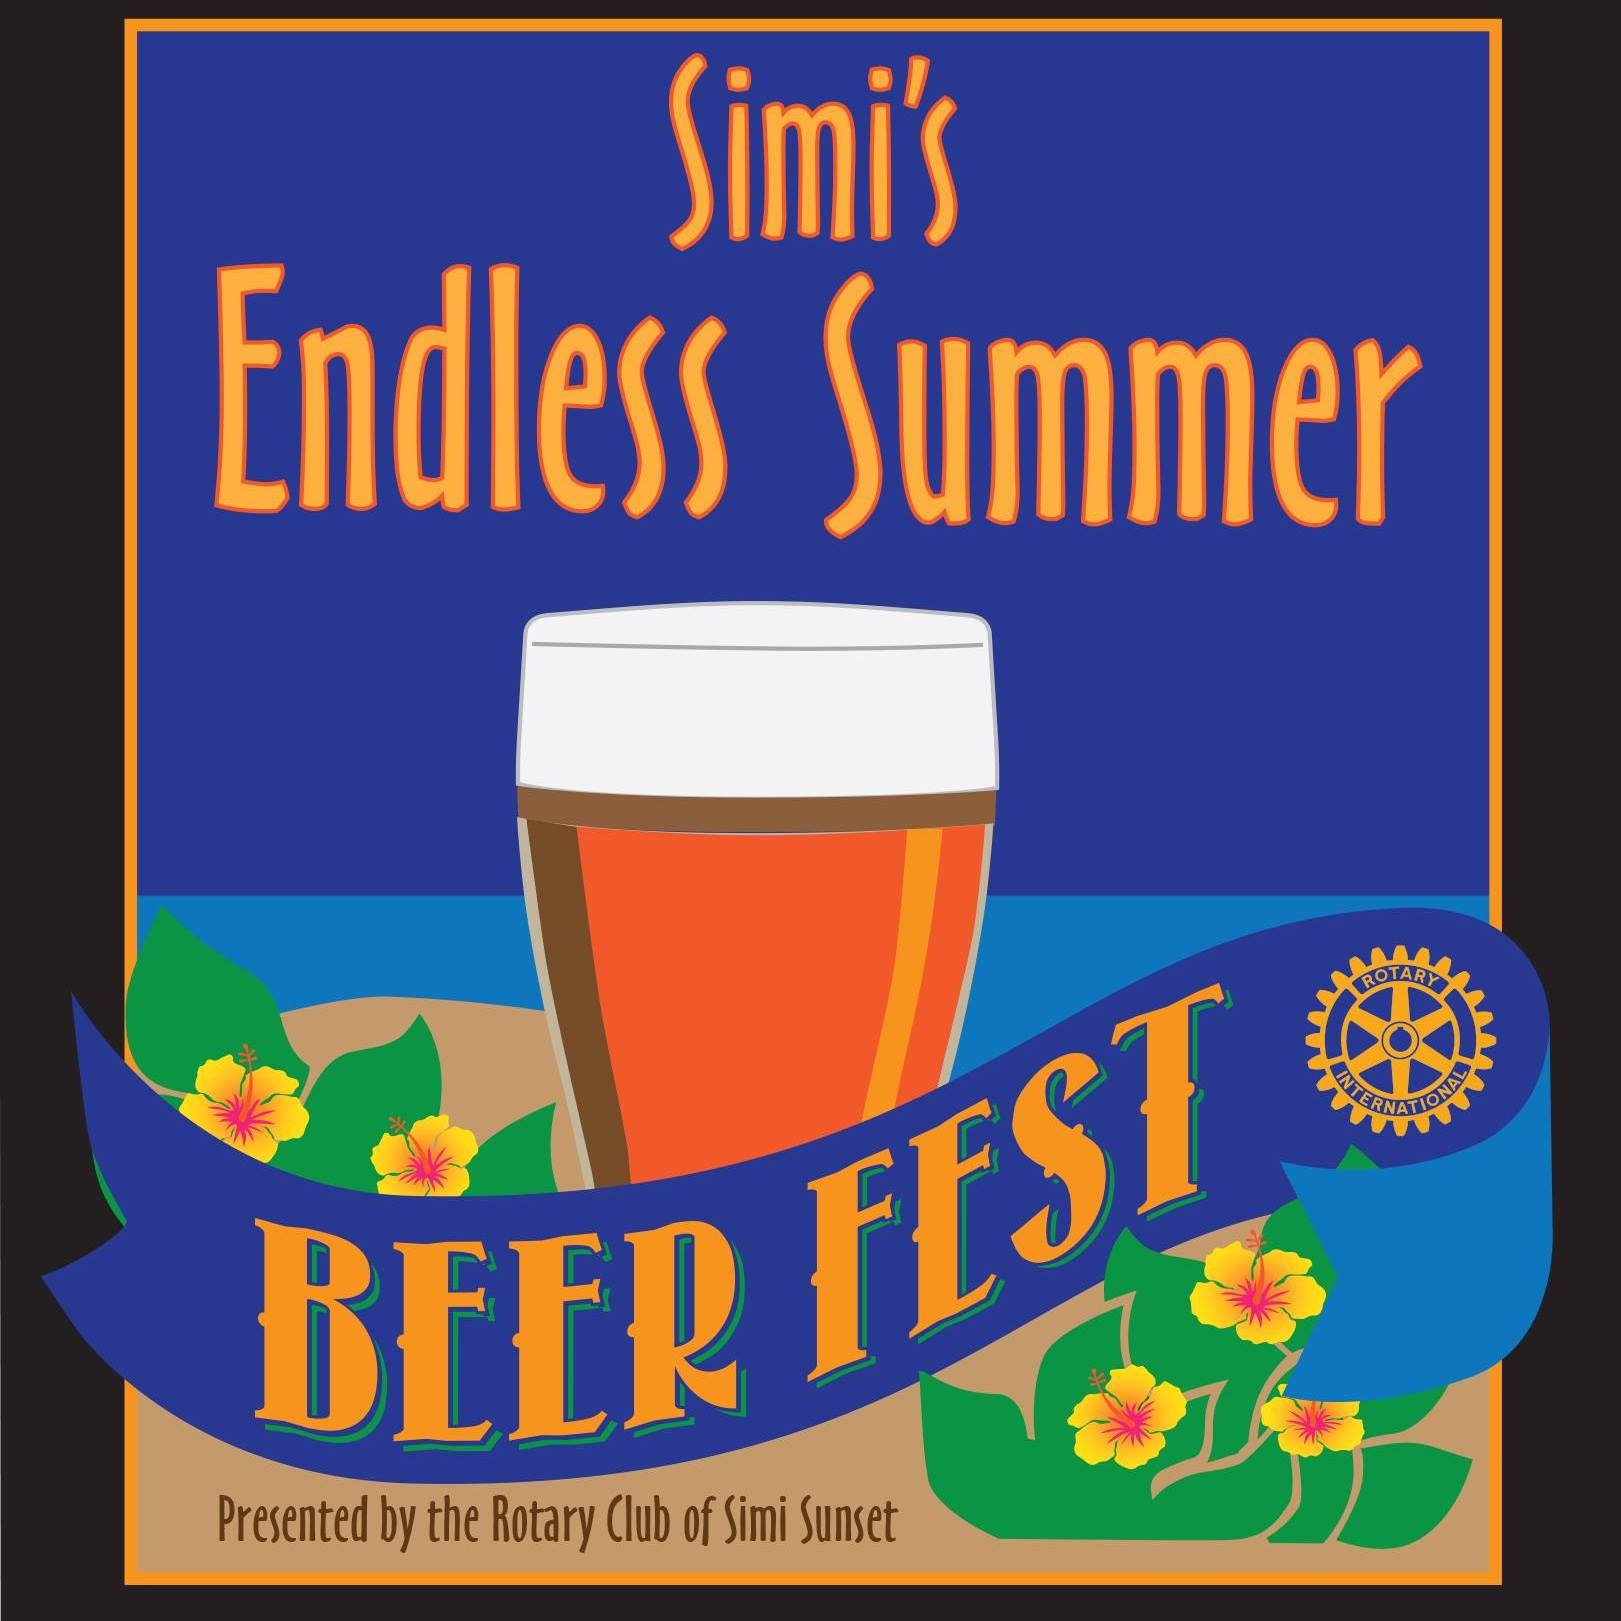 Simi's Endless Summer Beer Fest 